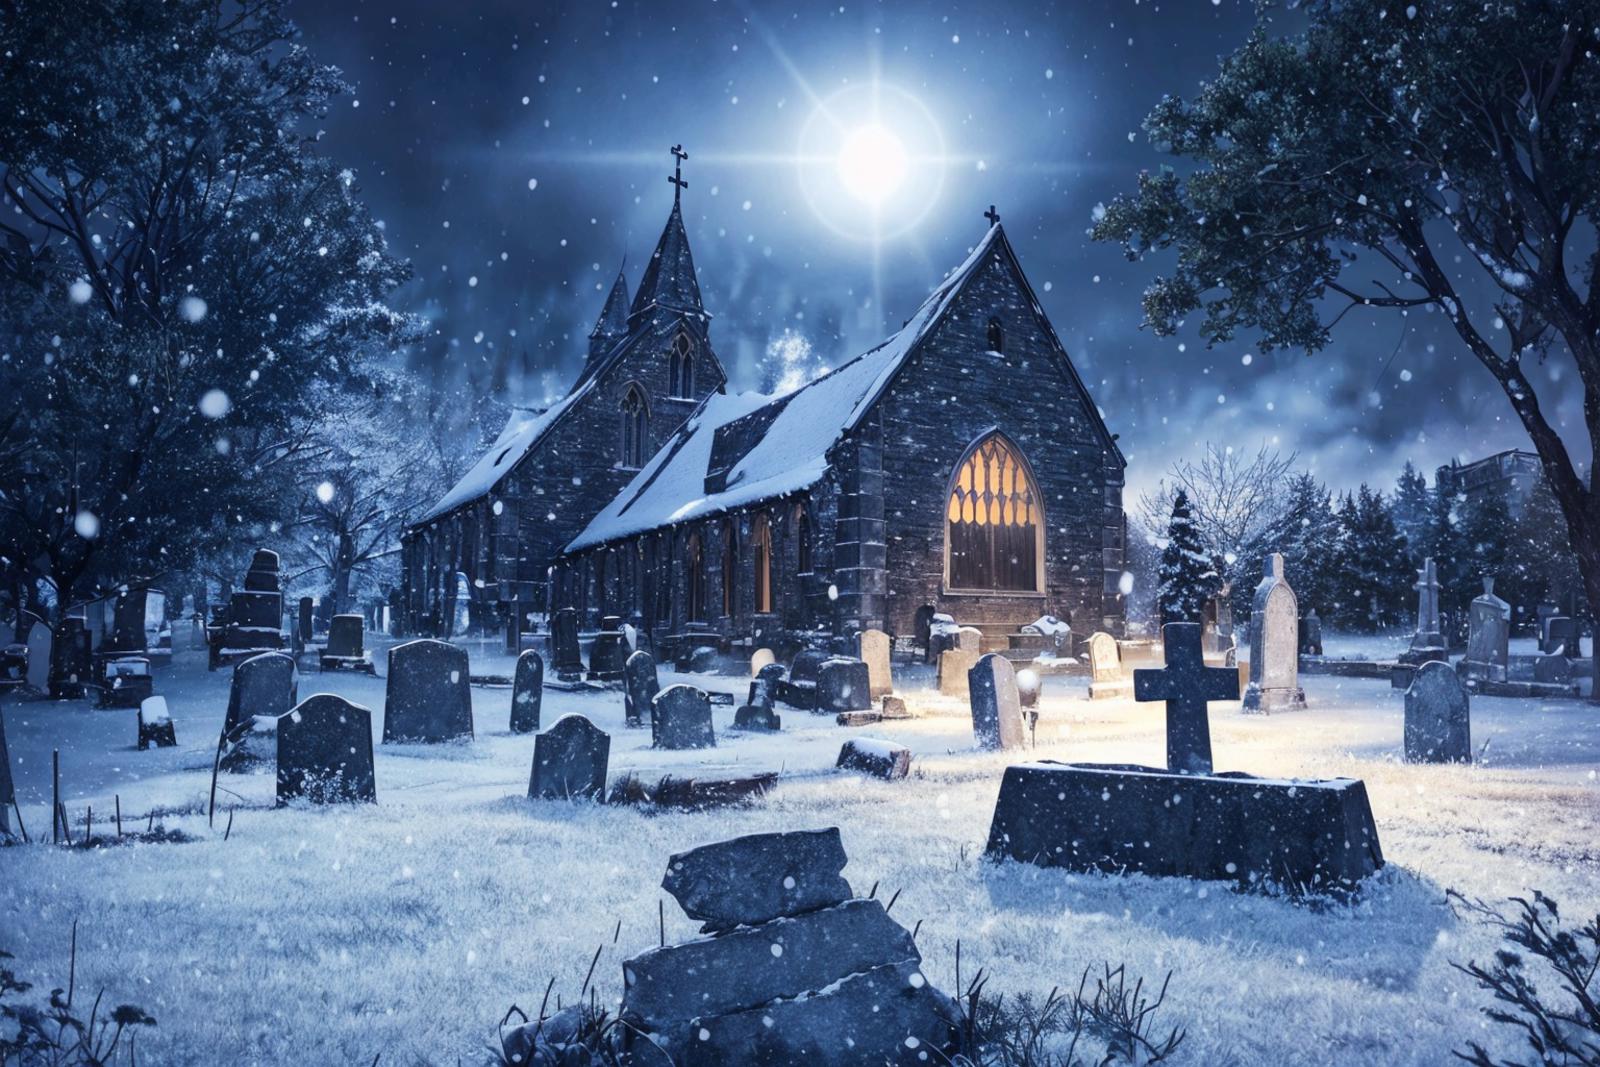 Edob Church Cemetery Creepy Night image by Tokugawa